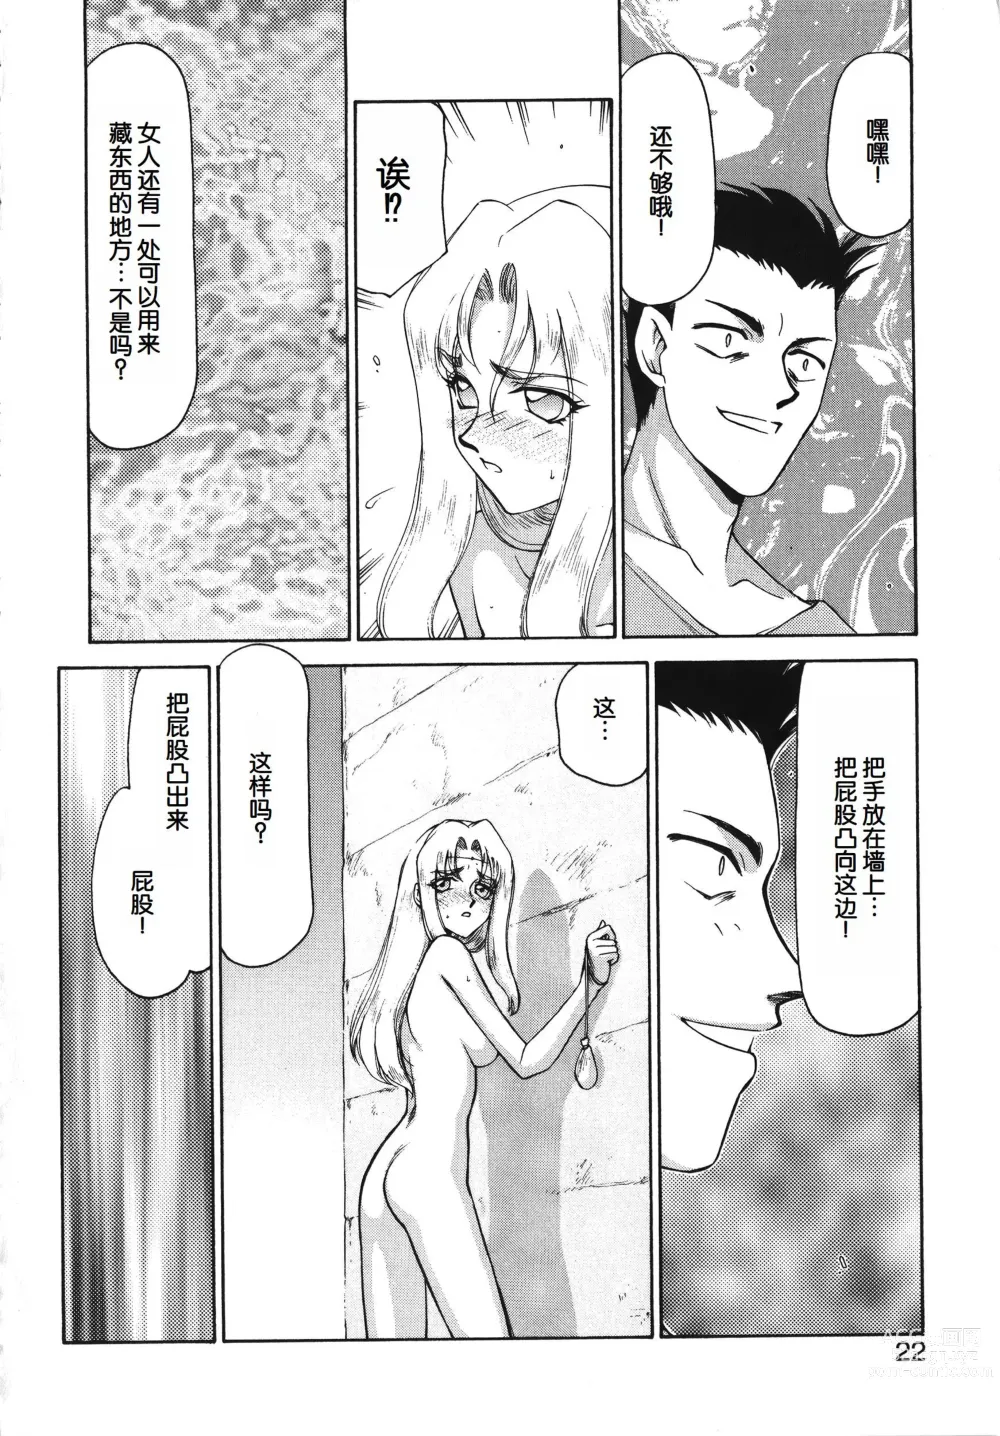 Page 22 of manga Bad Moon...